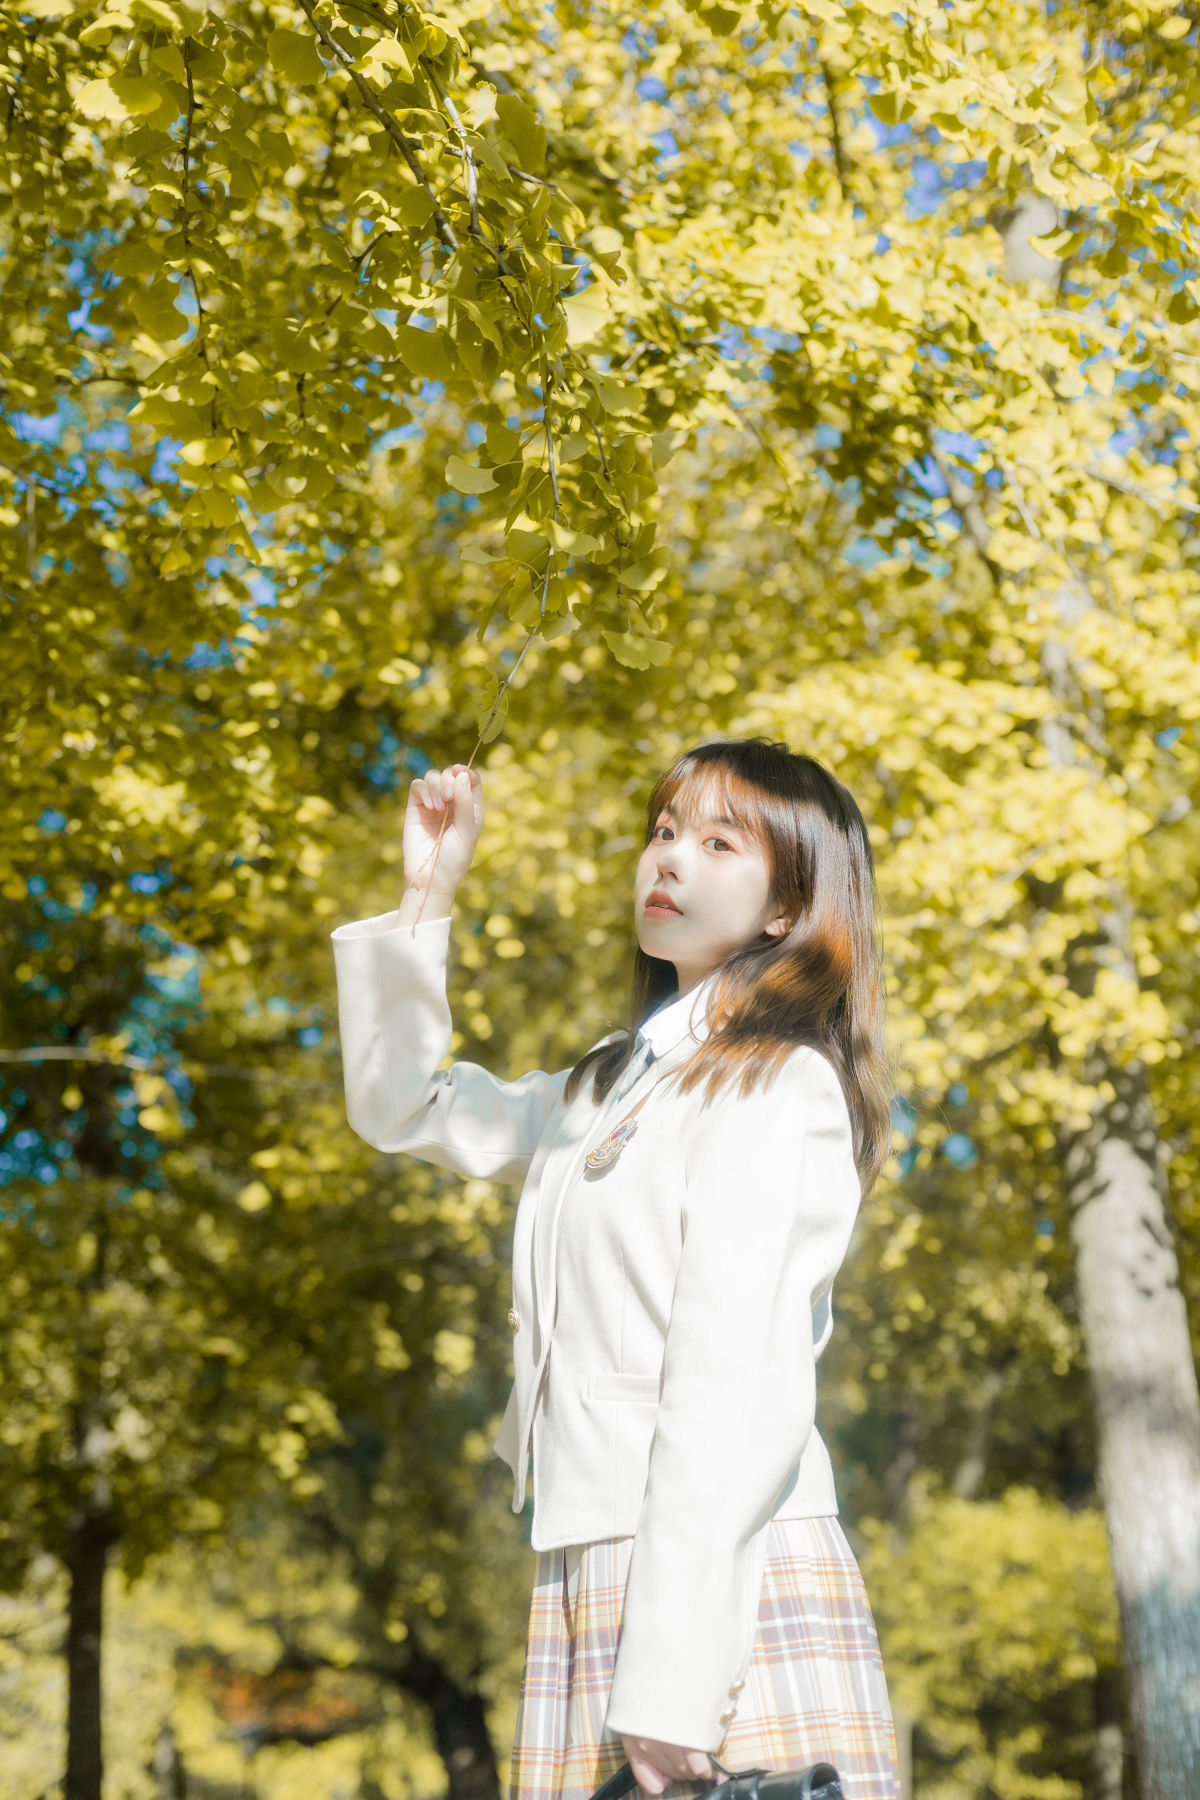 LLL_Lia__哈吉麻花《奶油味的秋》美图作品图片3